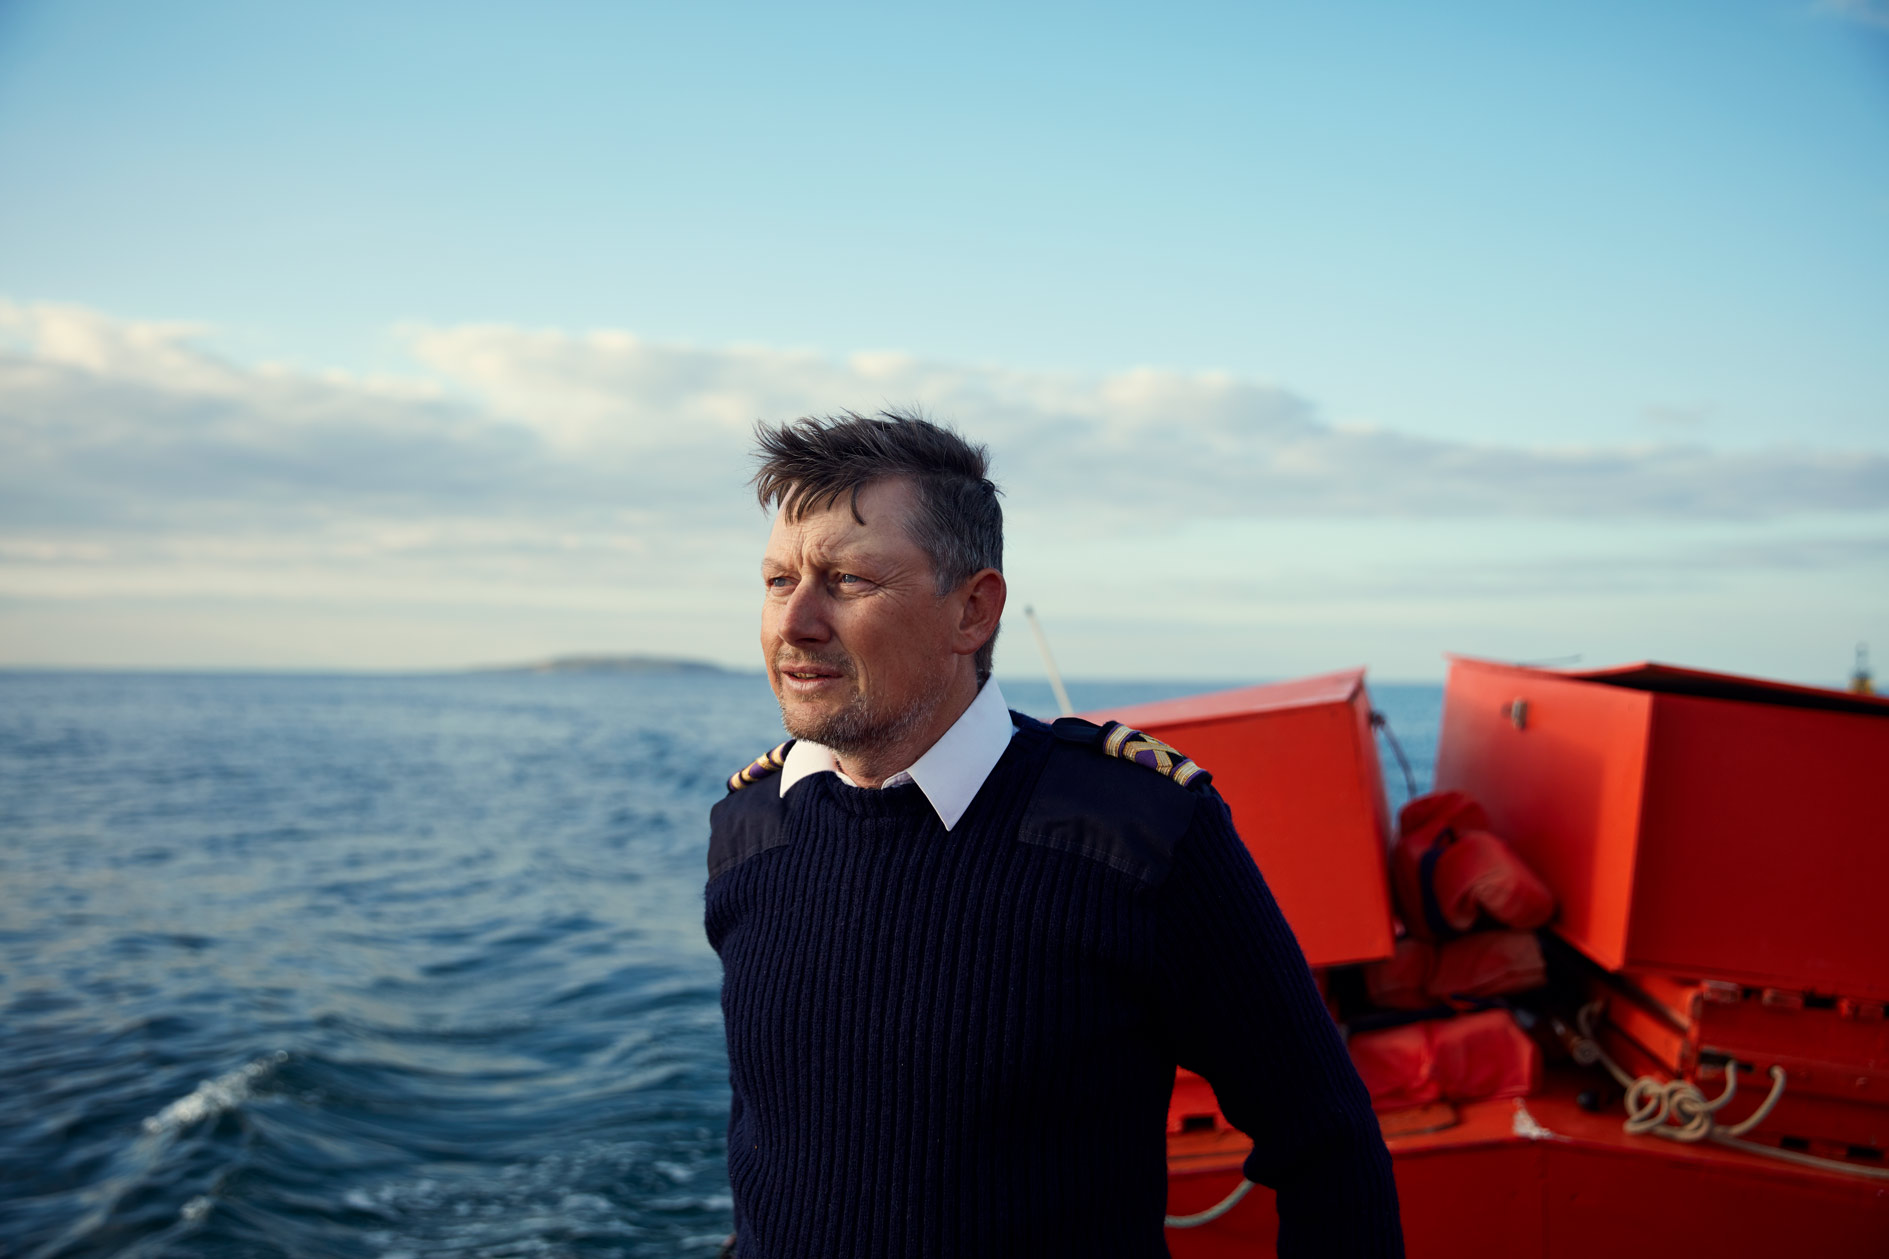 storytelling photography of a  fisherman at  sea